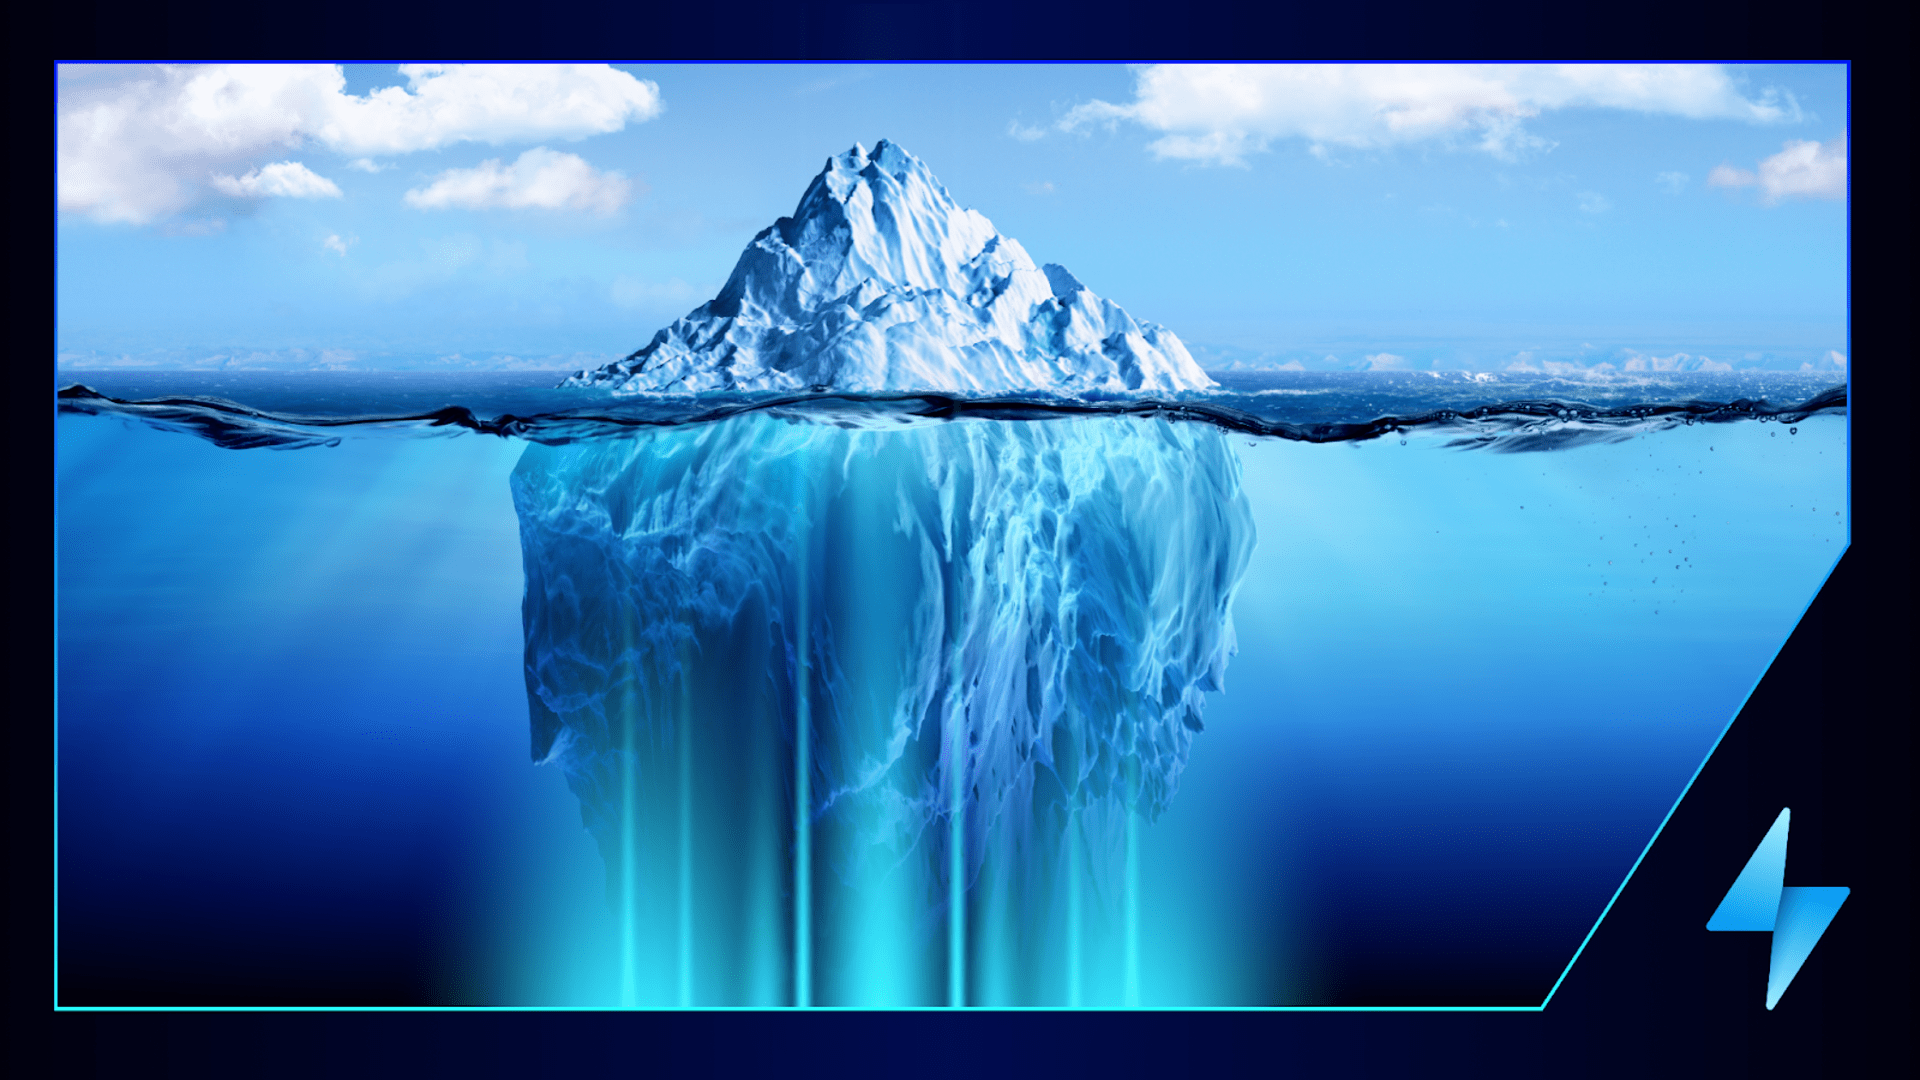 Elektrik’s Solution to Onchain Iceberg Order Challenges